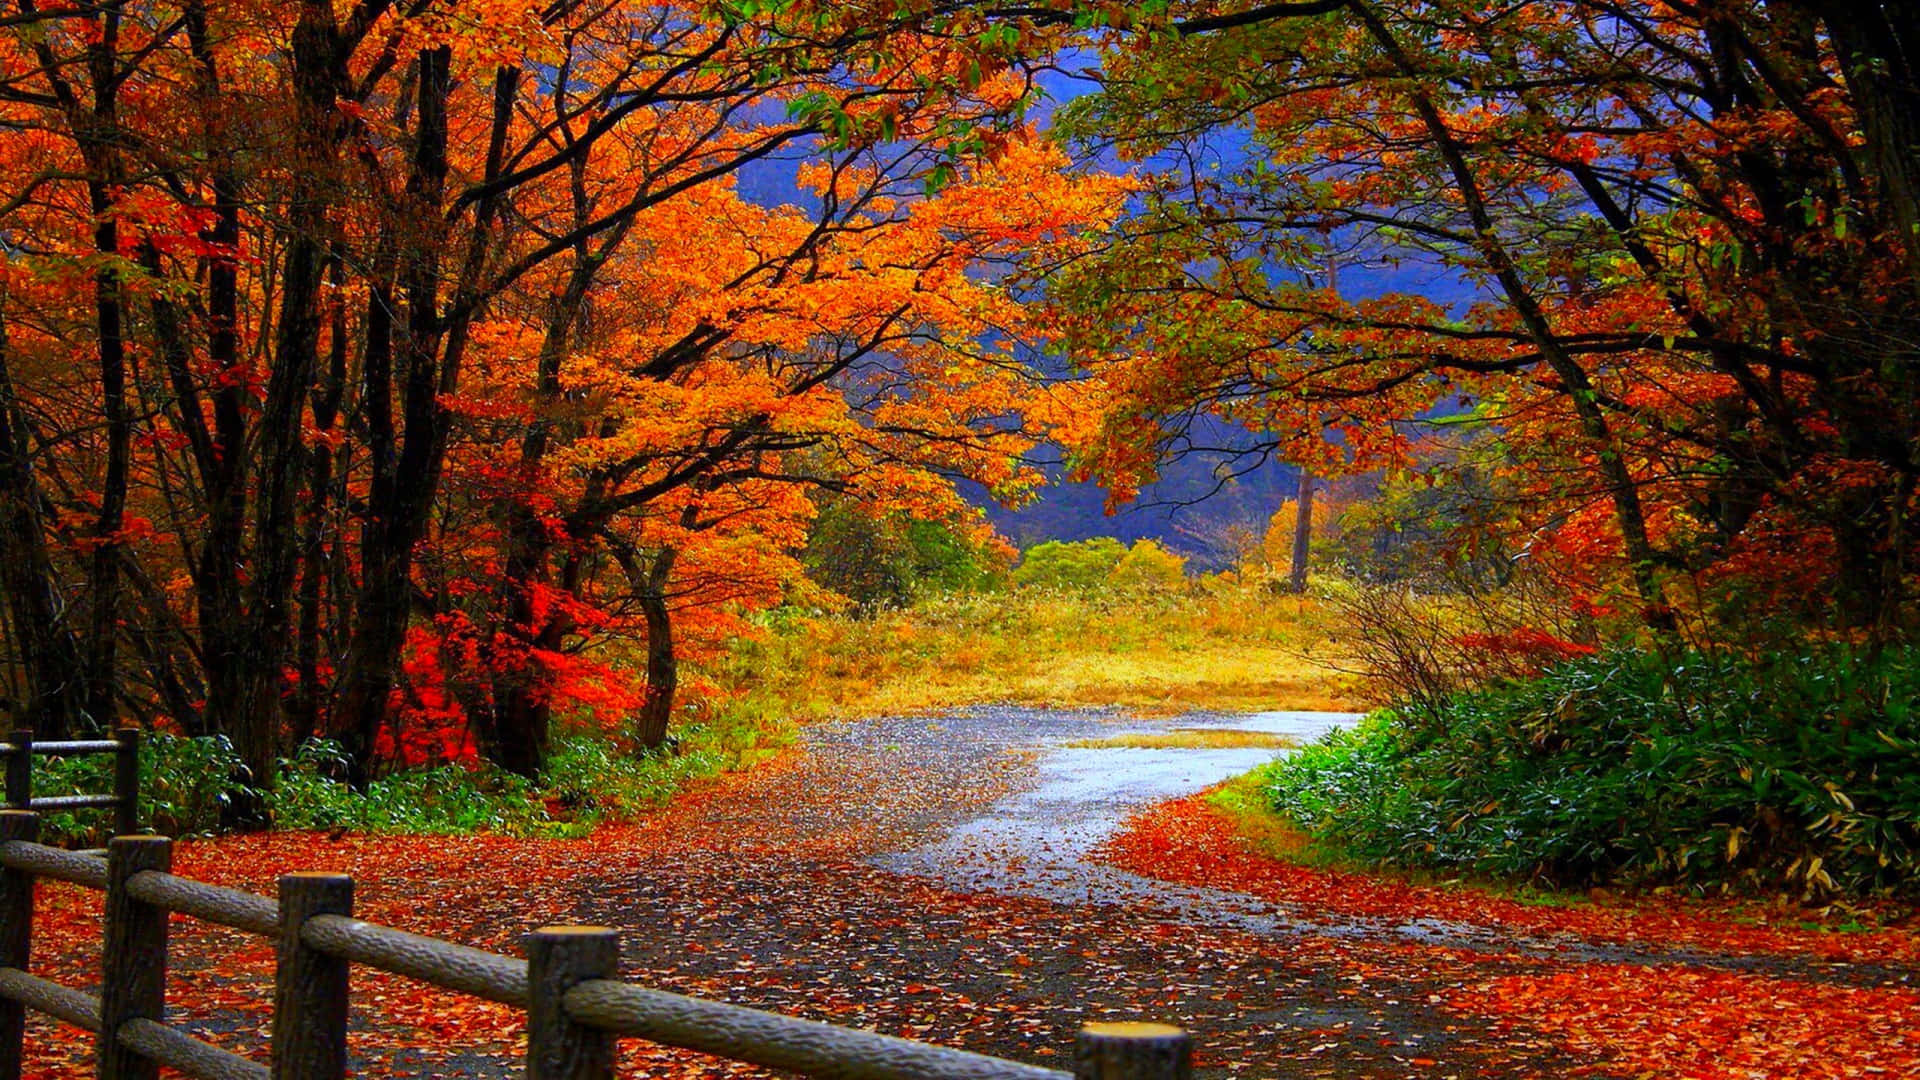 Autumn Season Colorful Aesthetic Nature Landscape Picture